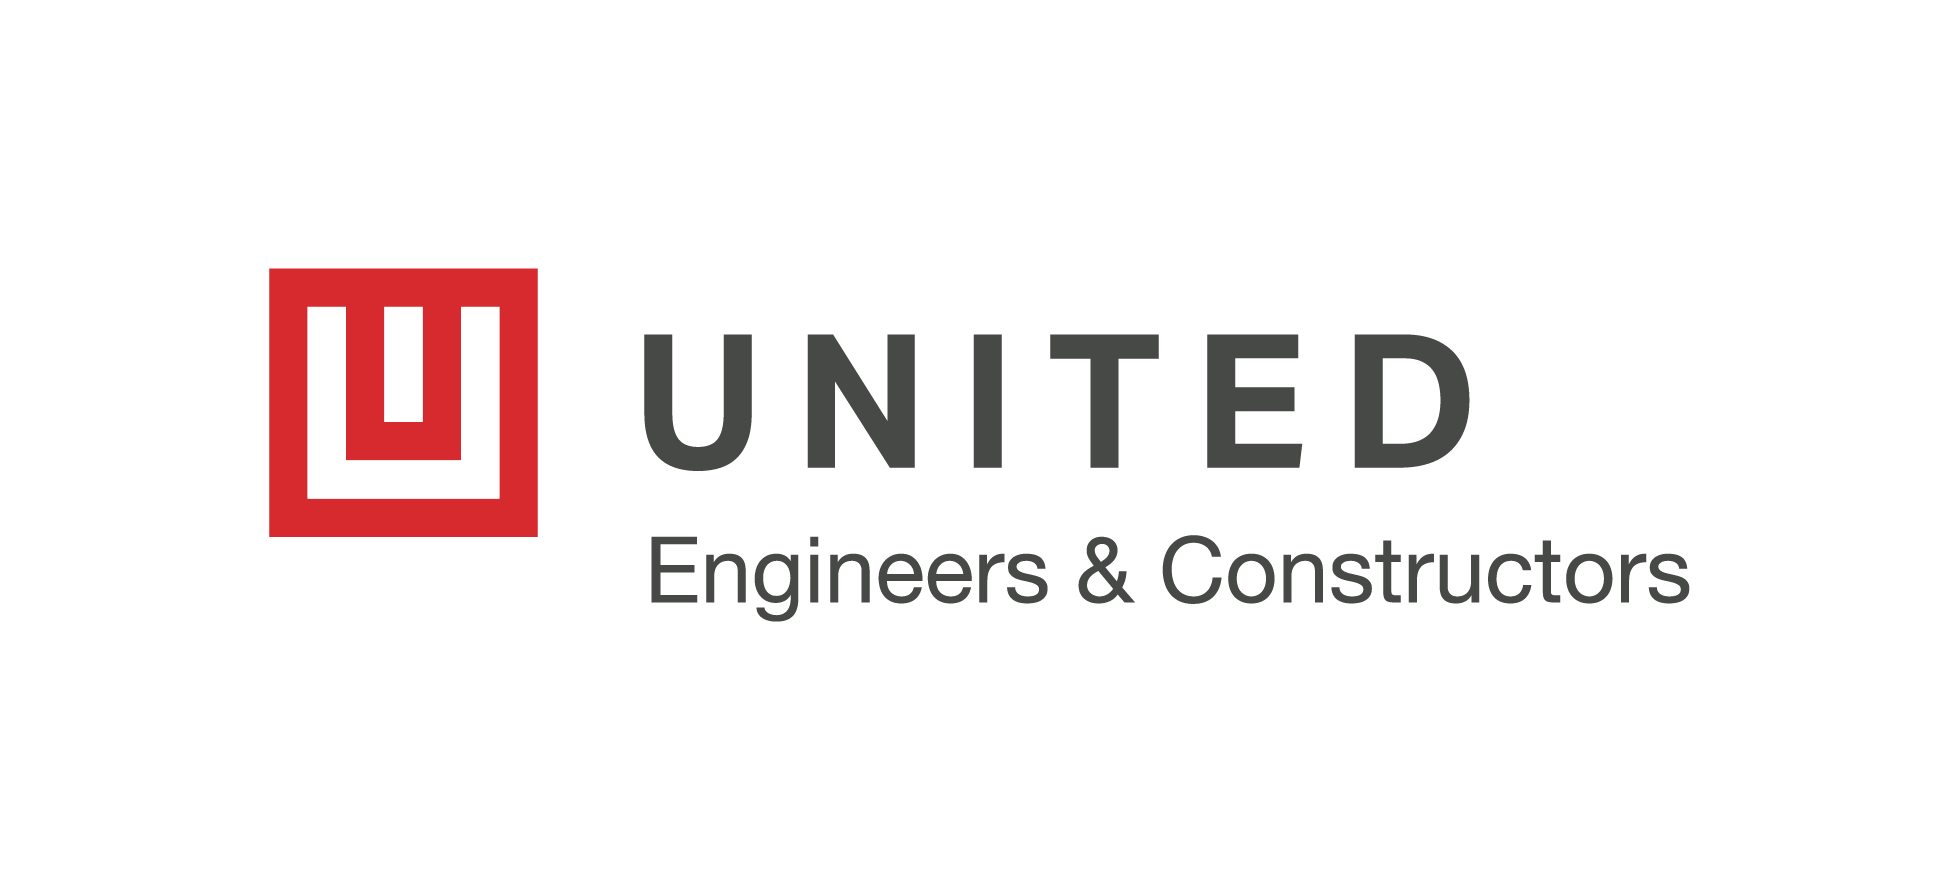 United Engineers & Constructors, Inc.